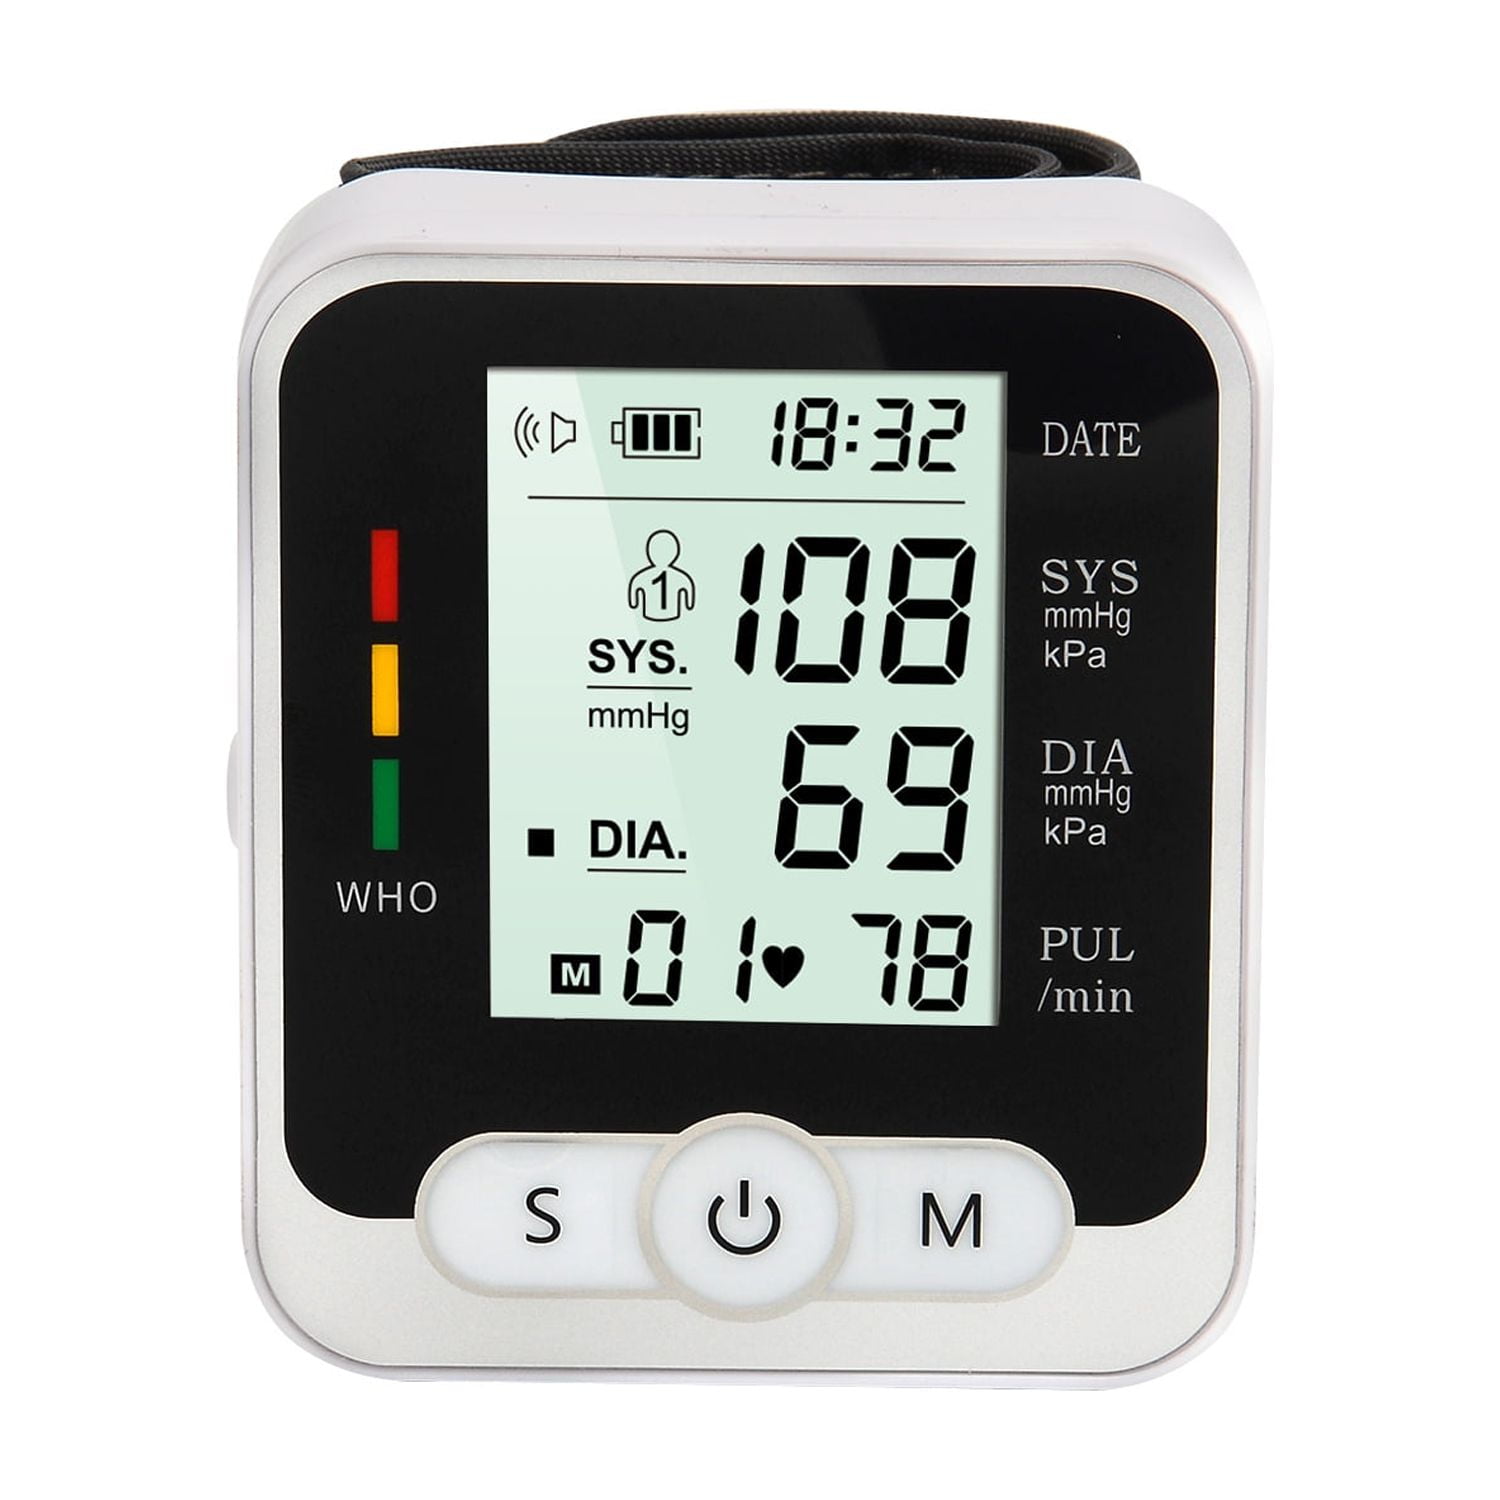 Automatic Wireless Wrist Blood Pressure Monitor (W/ Voice)